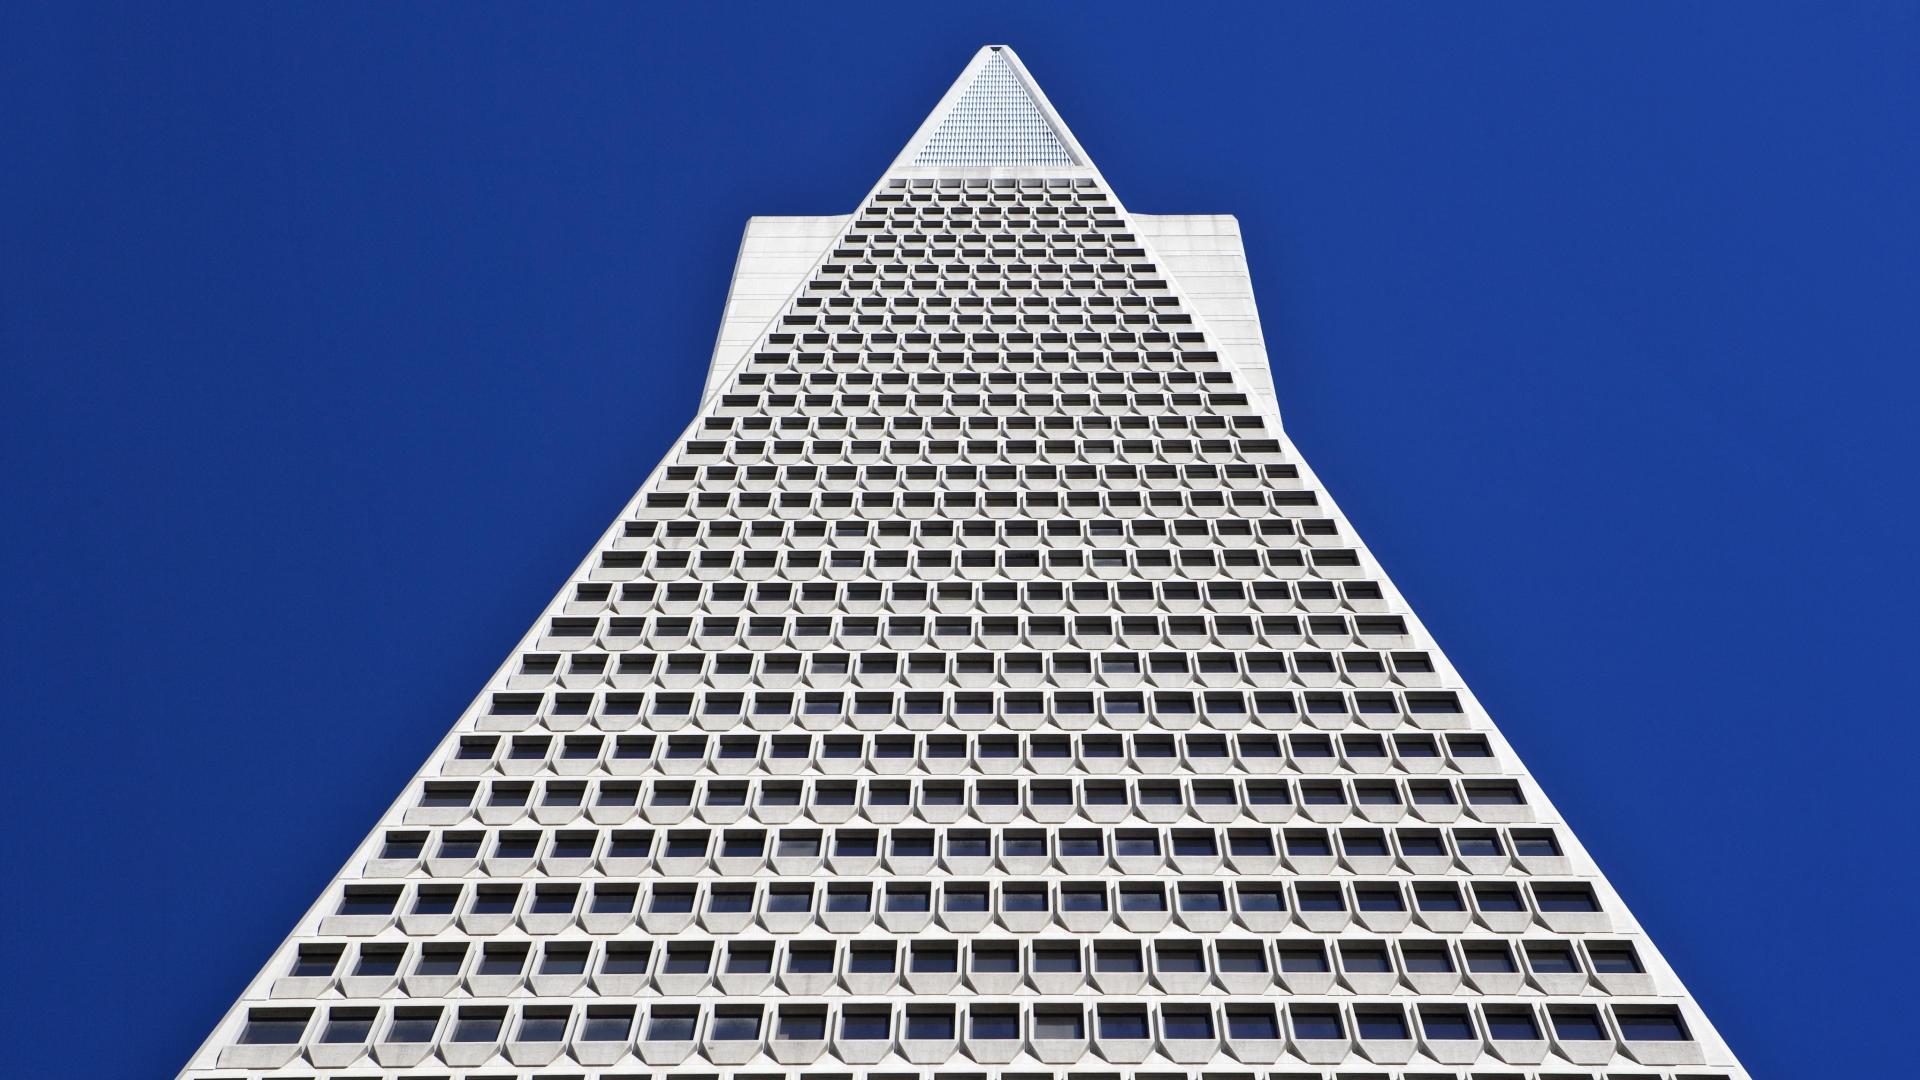 Wallpapers transamerica pyramid San Francisco California on the desktop